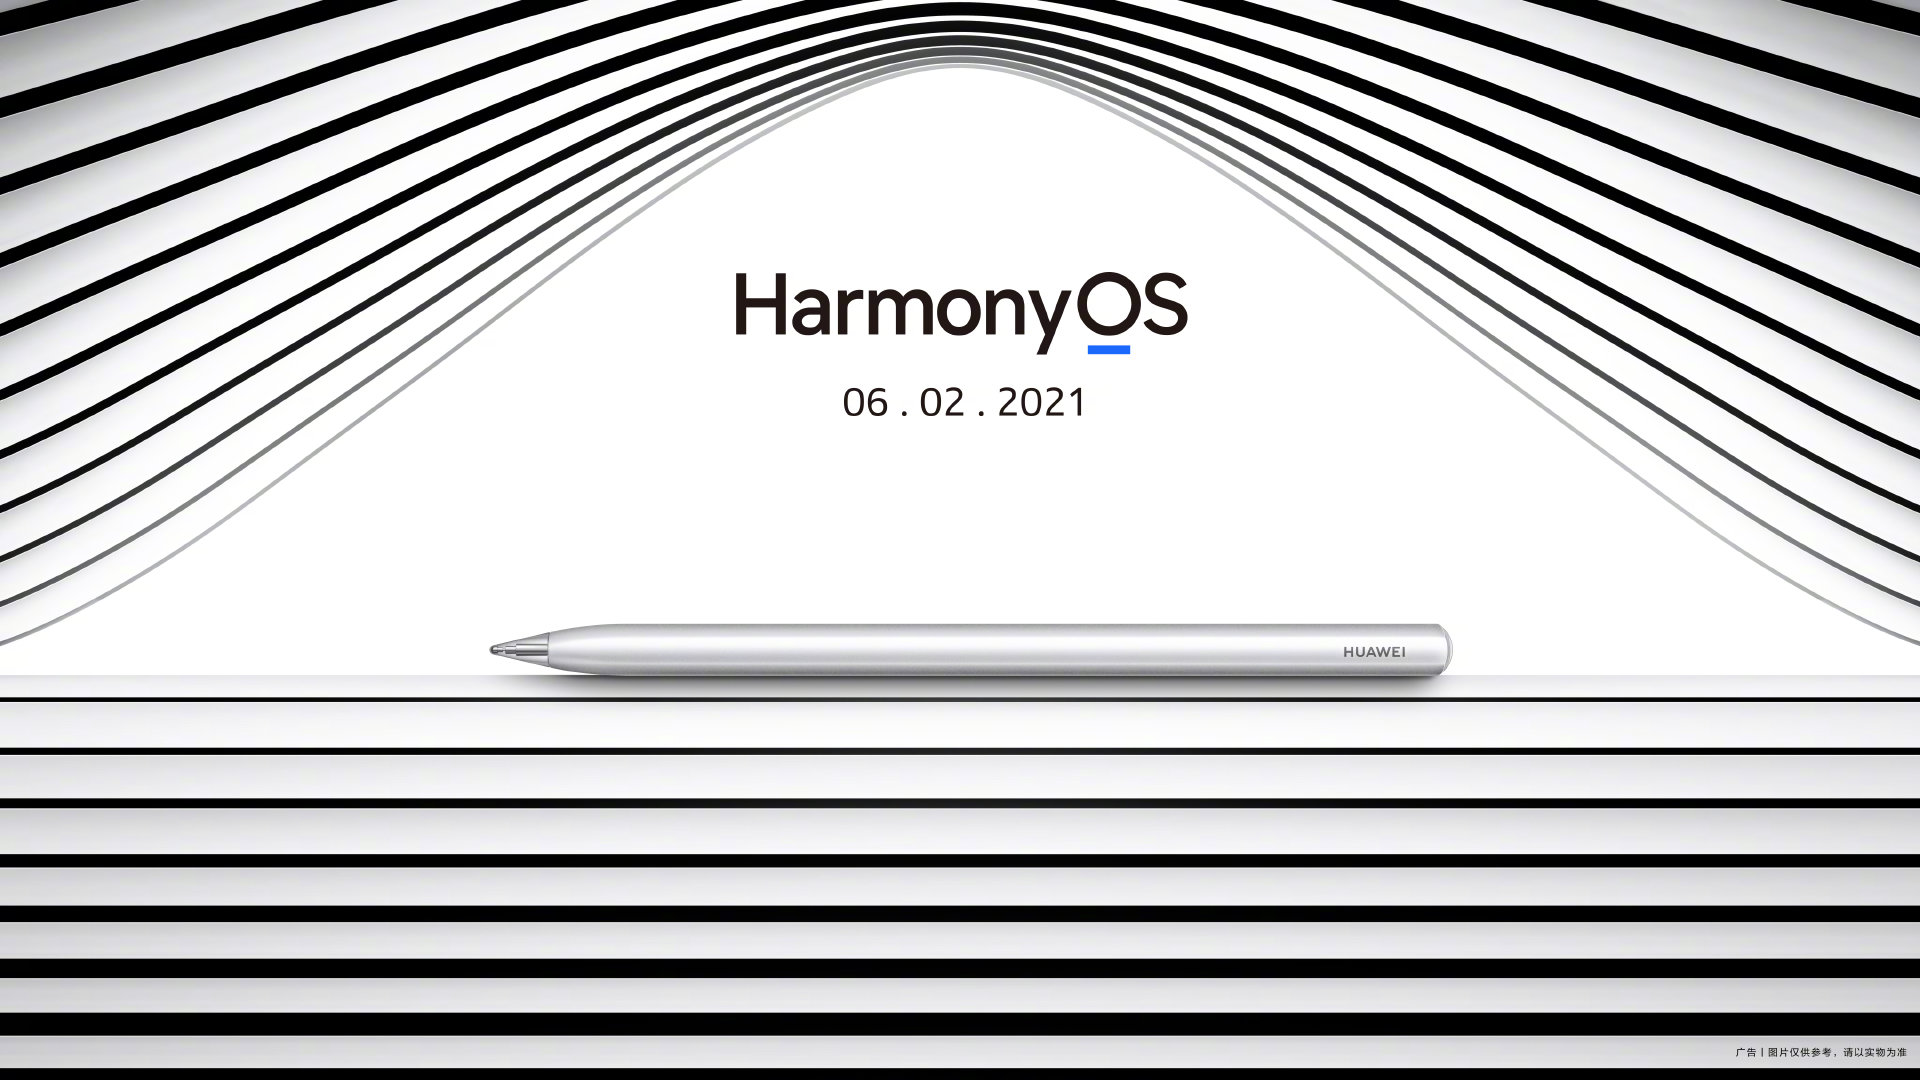 MatePad Pro with HarmonyOS launching on June 2